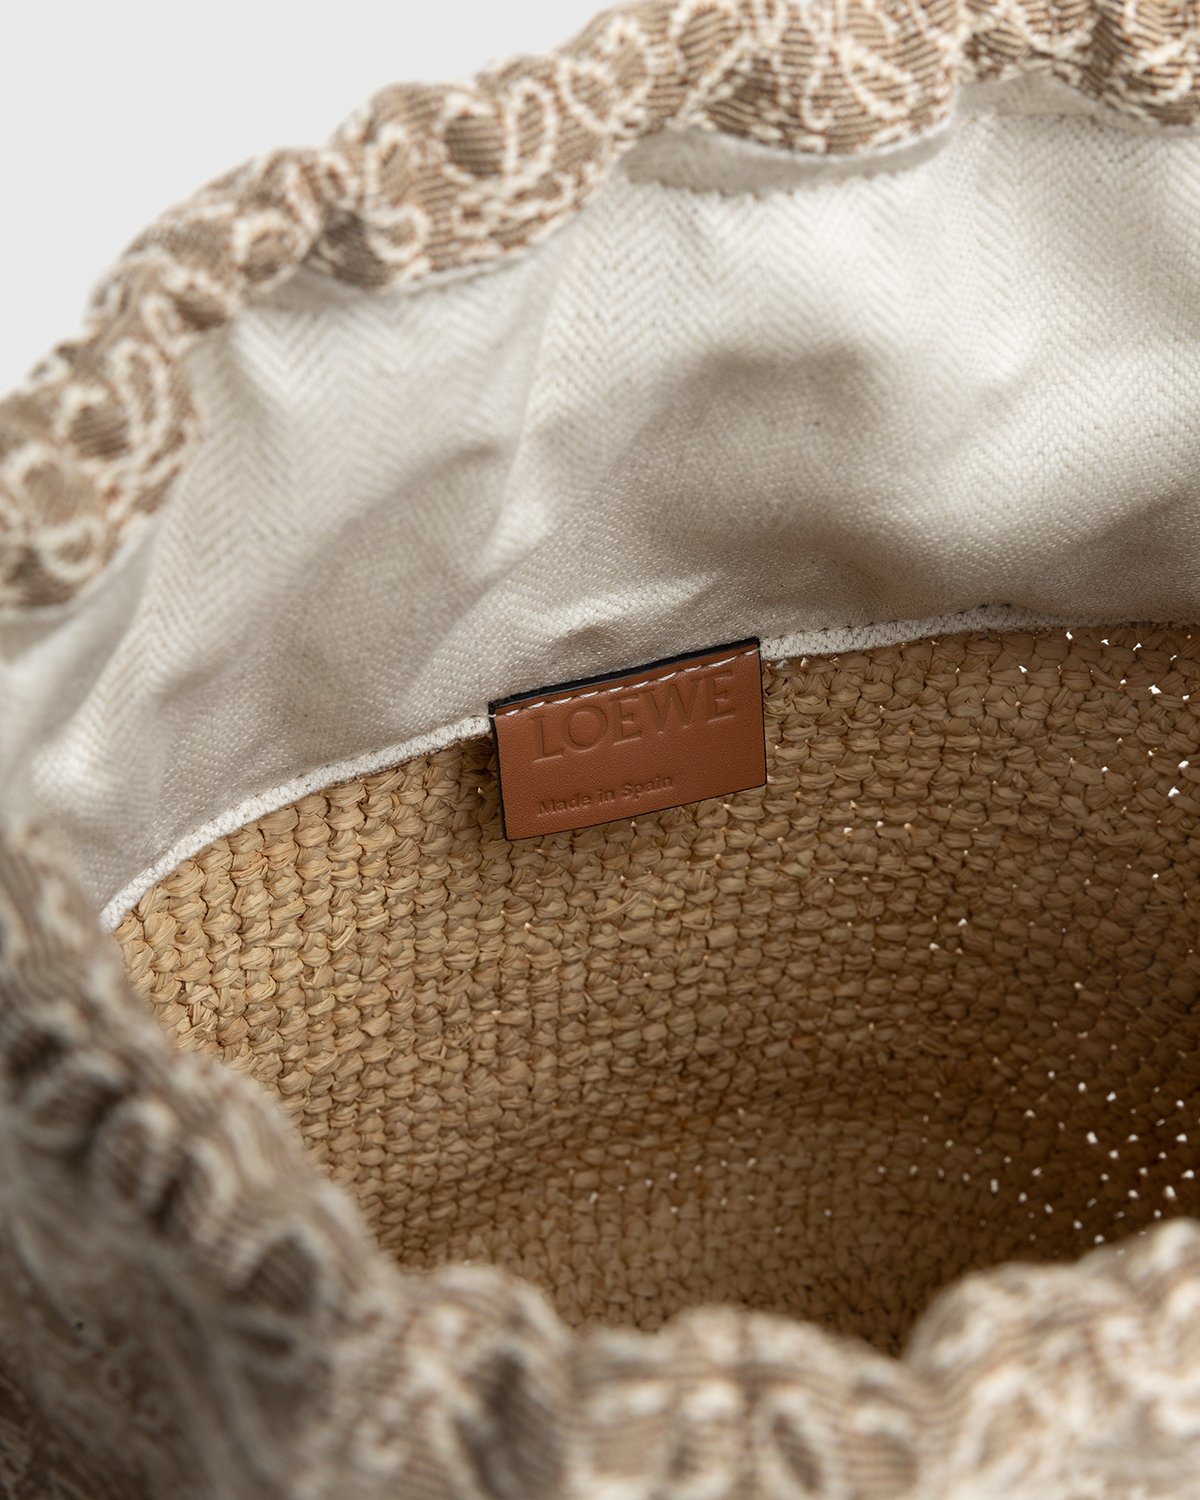 Loewe - Paula's Ibiza Pochette Anagram Basket Bag Natural/Tan - Accessories - Beige - Image 4